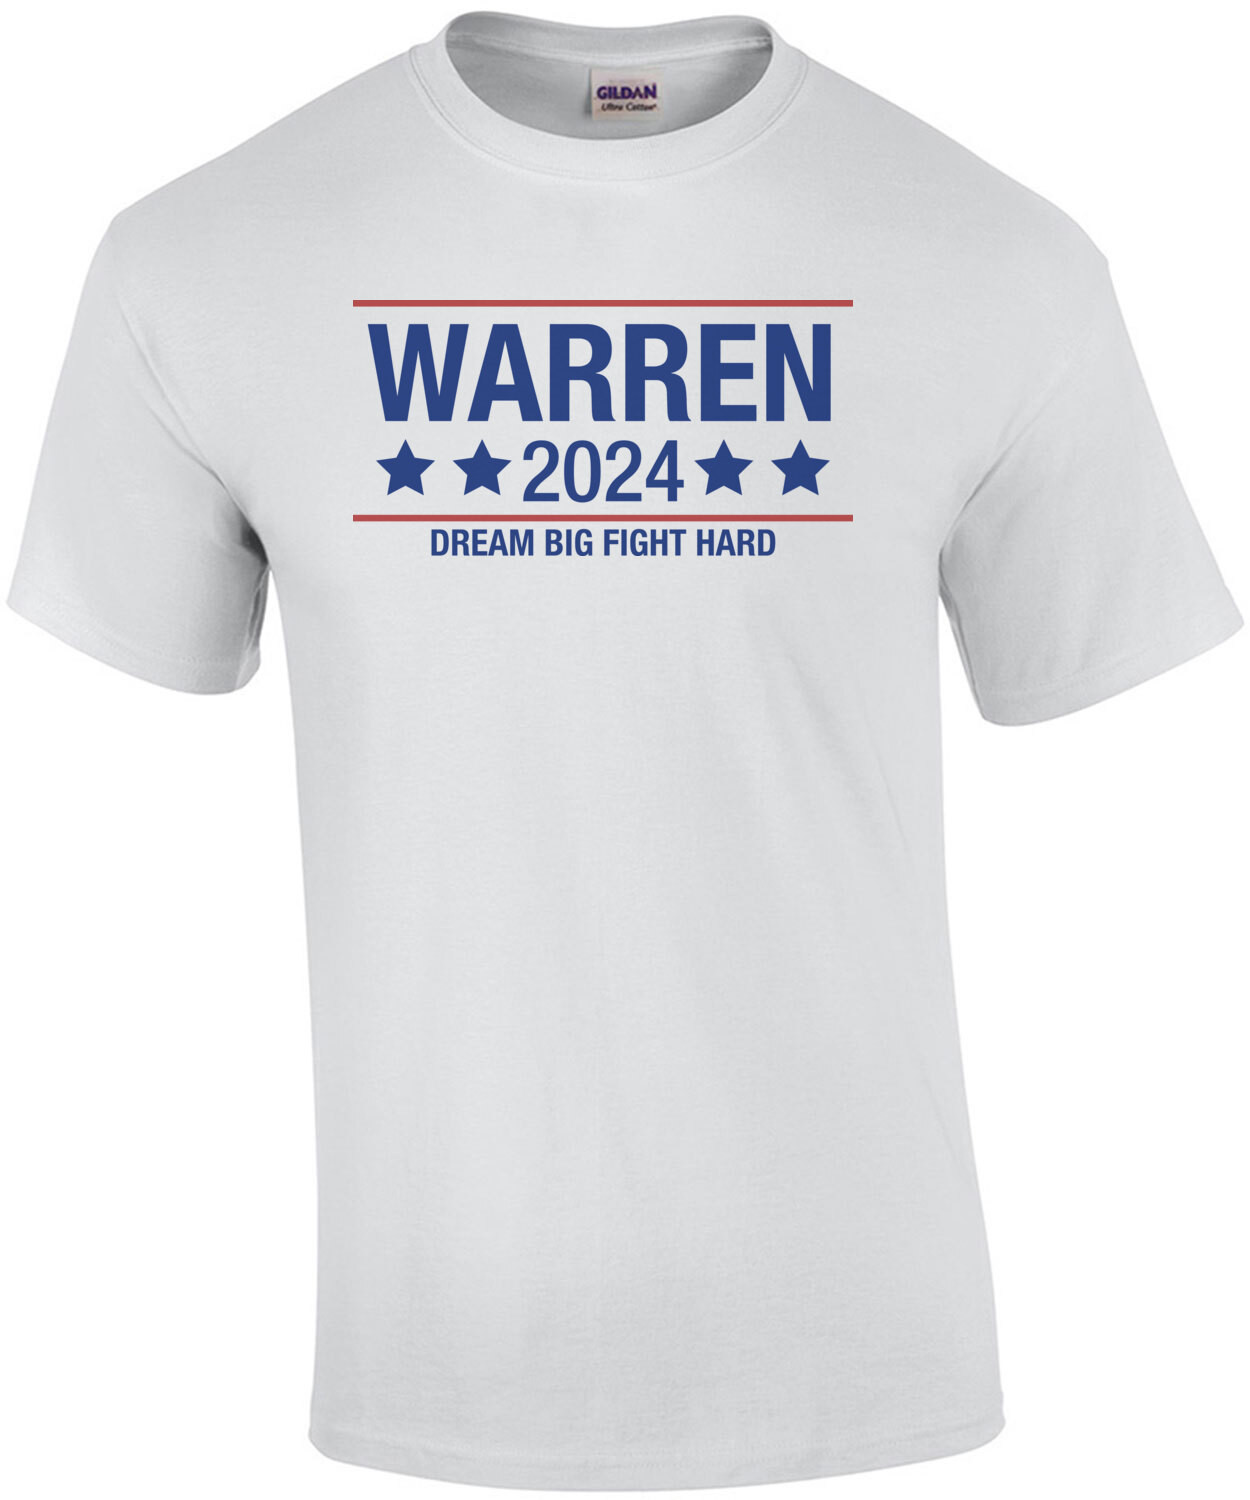 Warren 2024 Dream Big Fight Hard Shirt